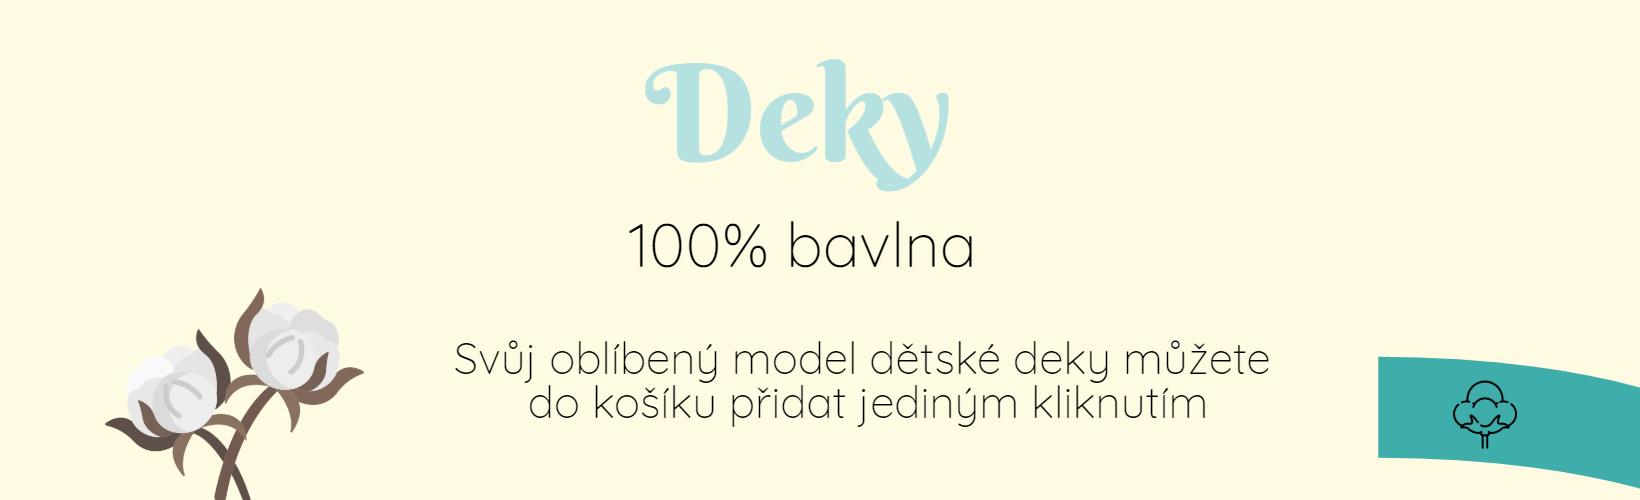 Detske_deky